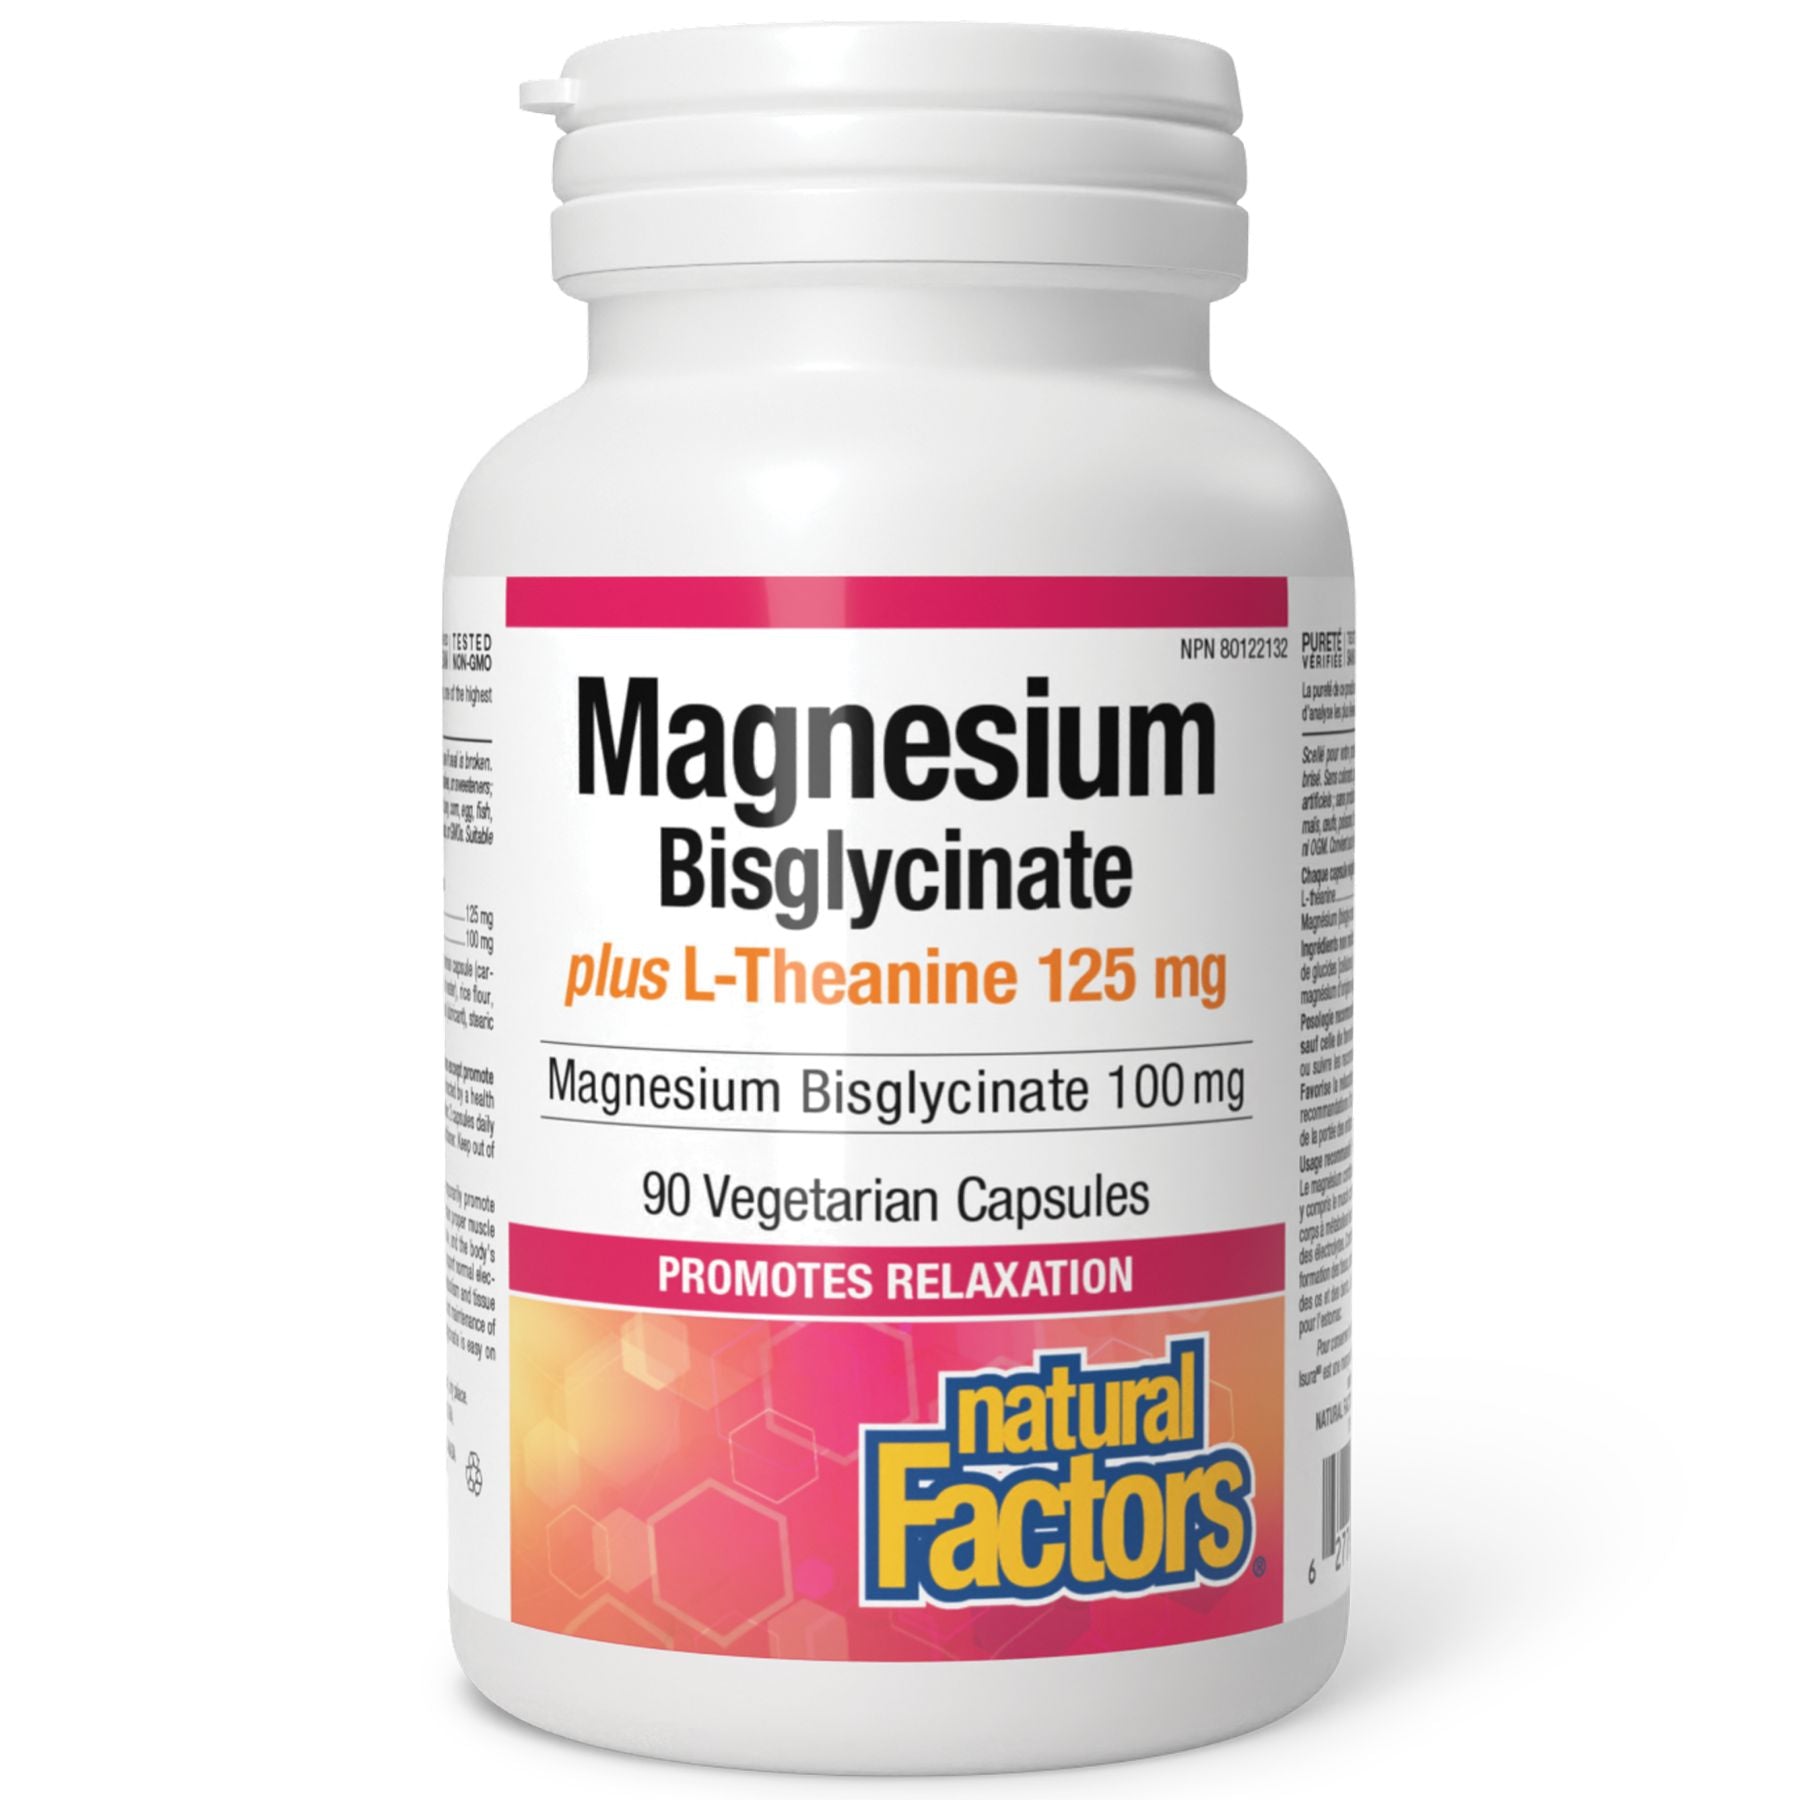 Natural Factors Magnesium Biglycinate 100mg + L-theanine